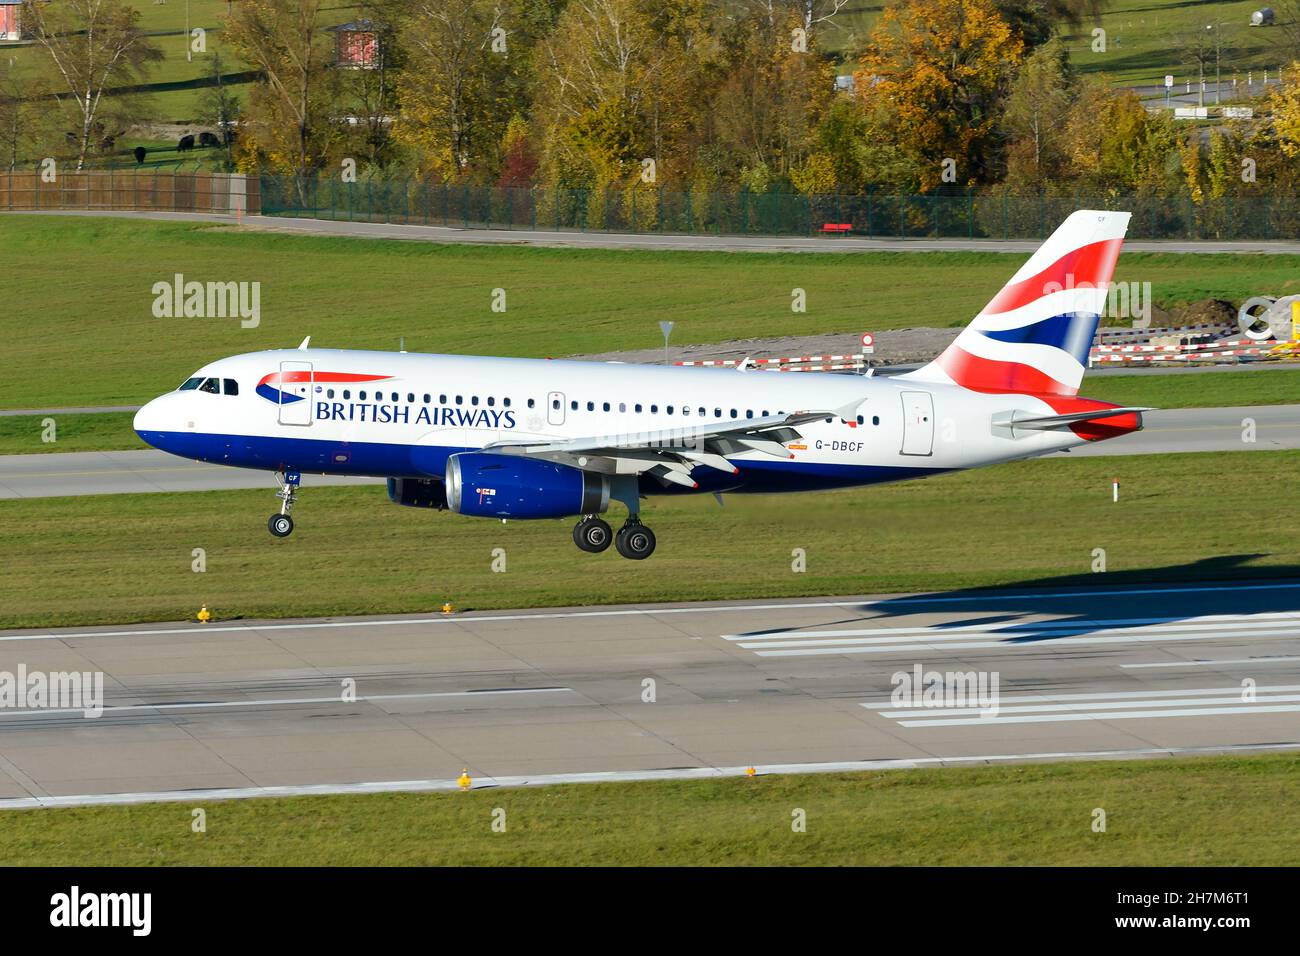 British Airways Airbus A319 aircraft landing at Zurich. Airplane G-DBCF of British Airways used for short haul flights. Stock Photo